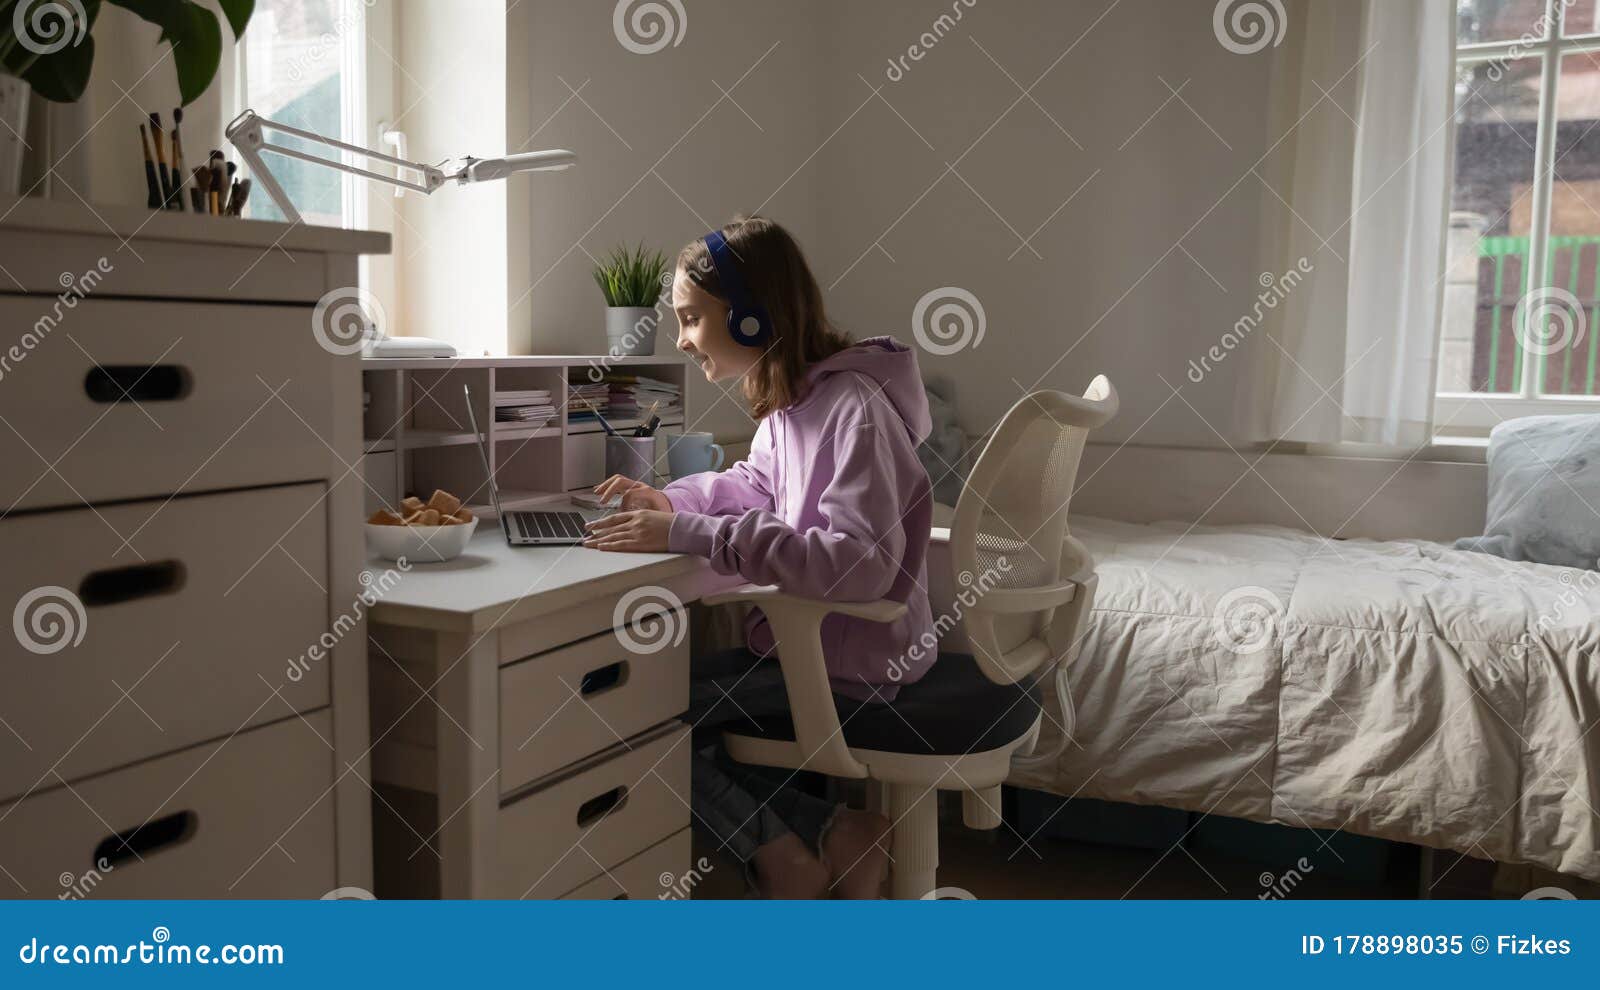 teenage girl wearing headphones elearning from home using computer app